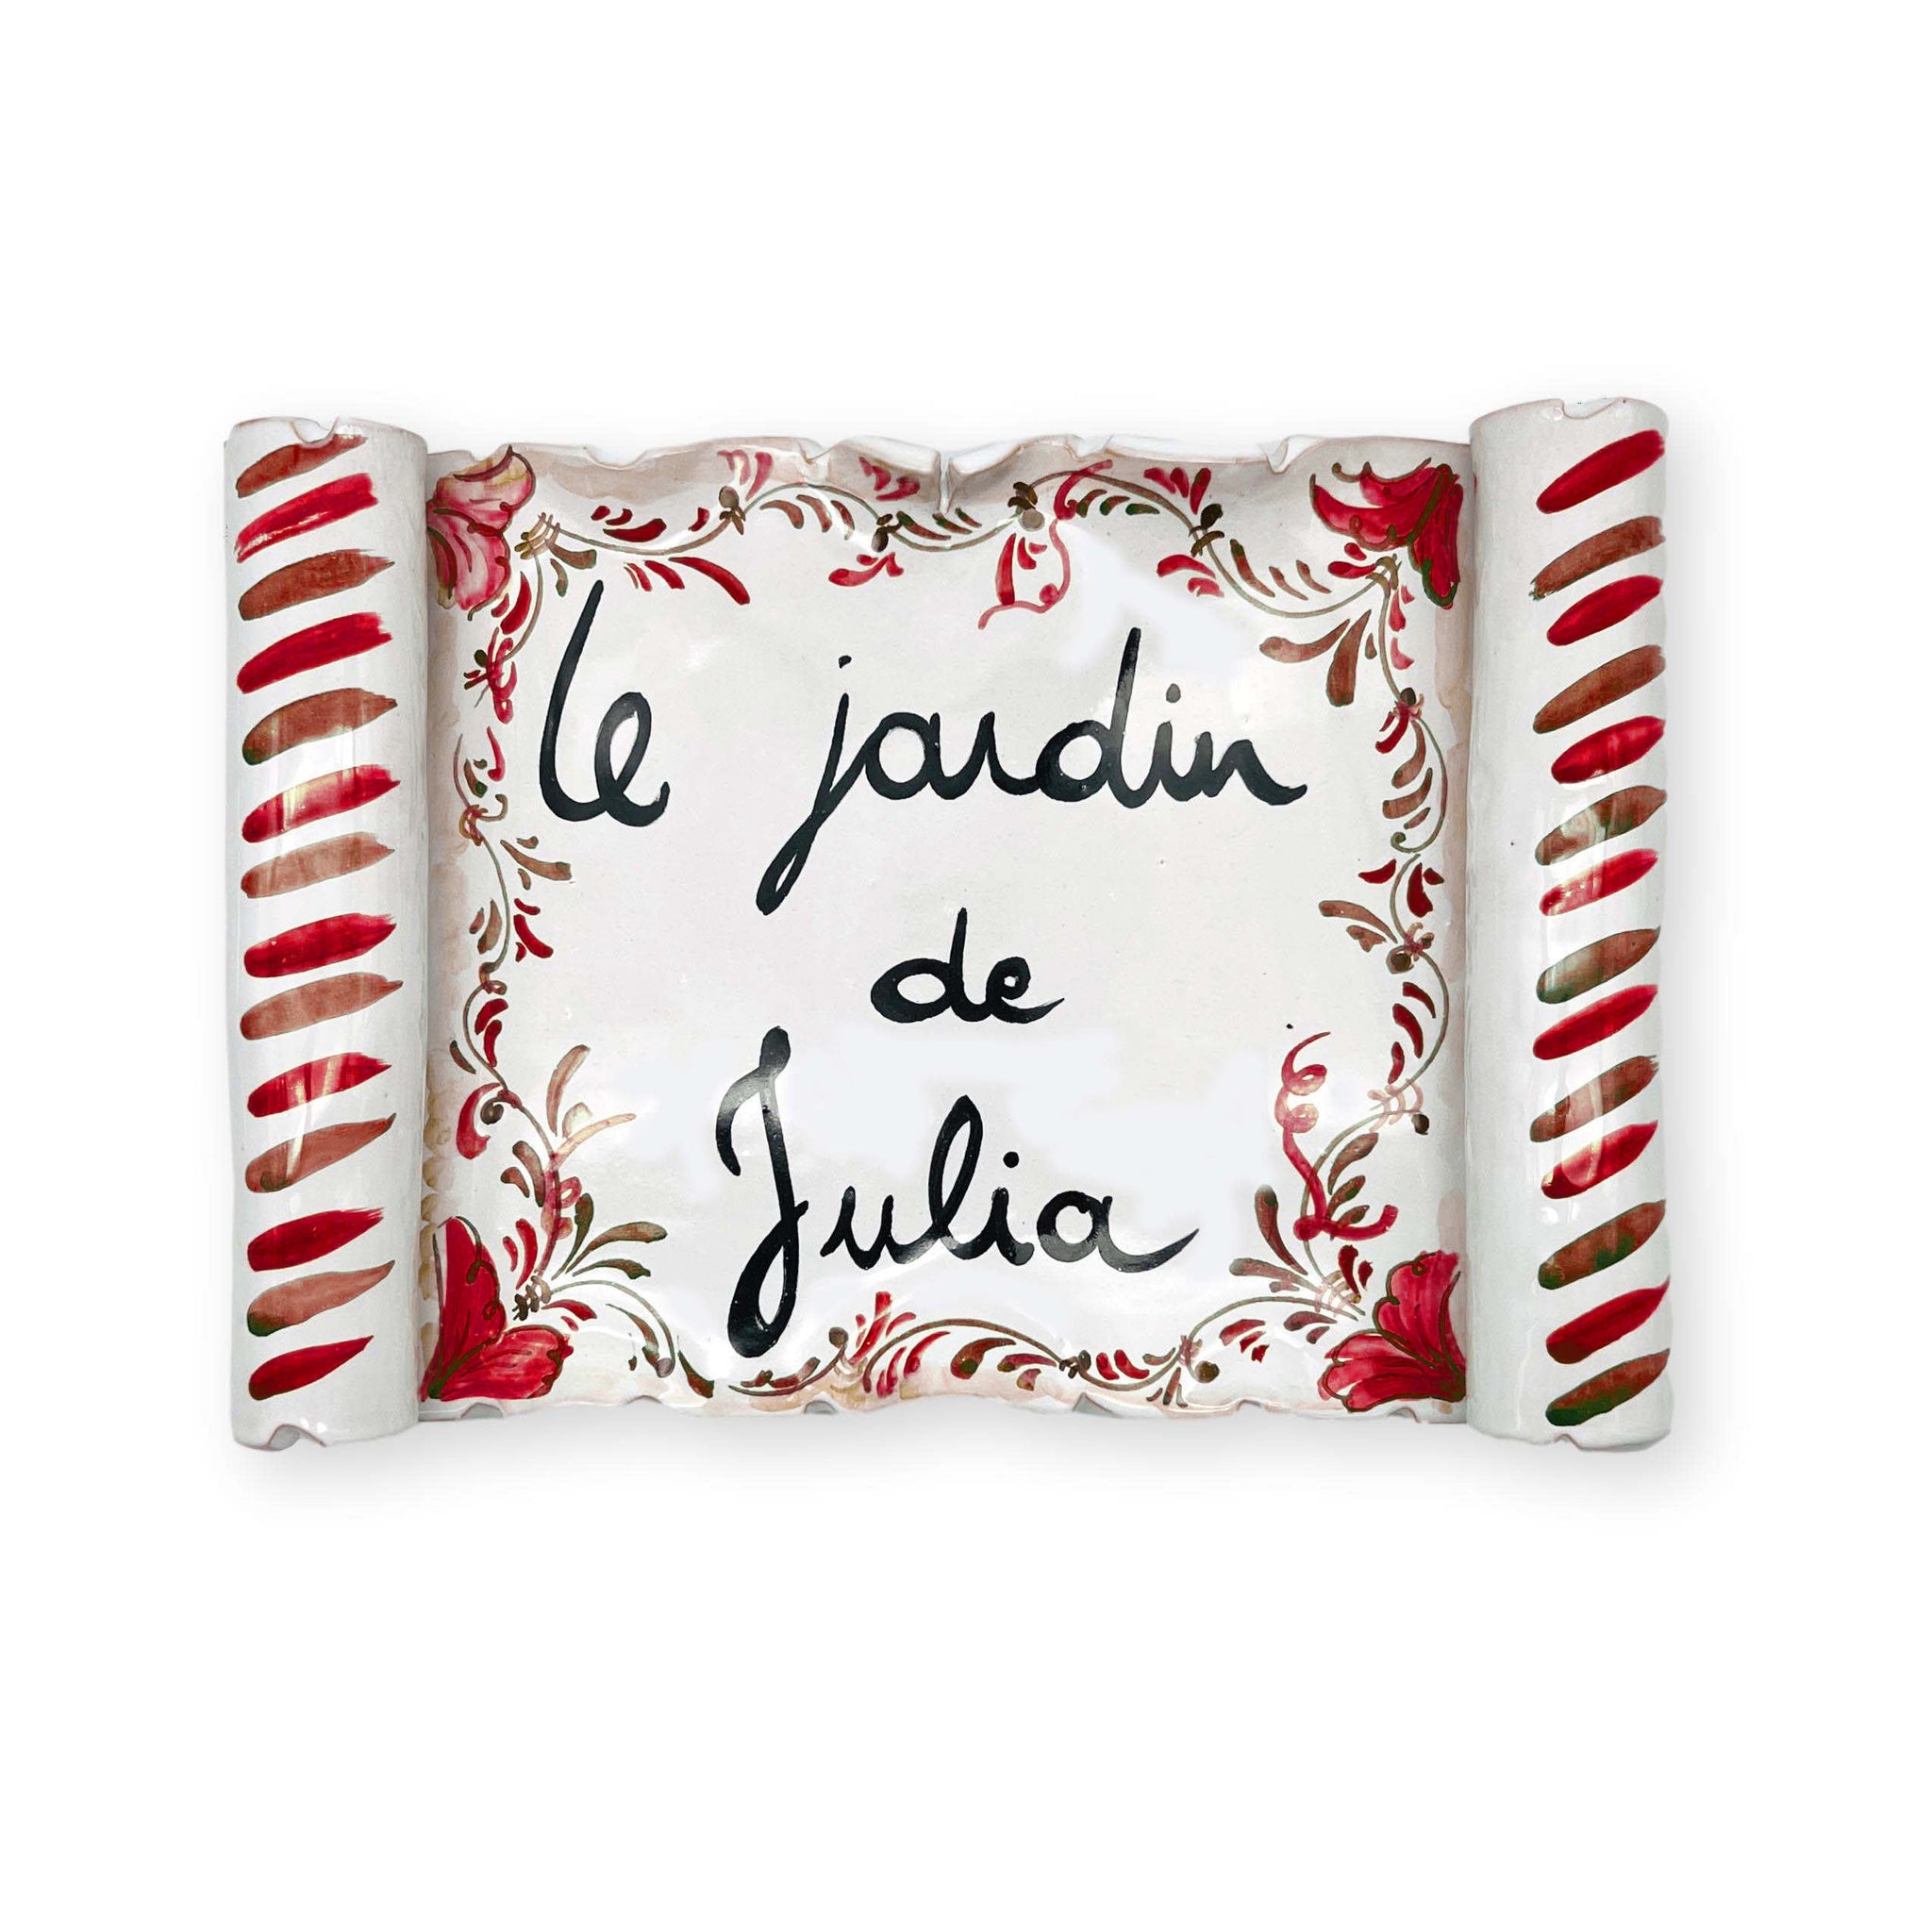 Personalized Ceramic Plaque - Red-Julia B. Casa